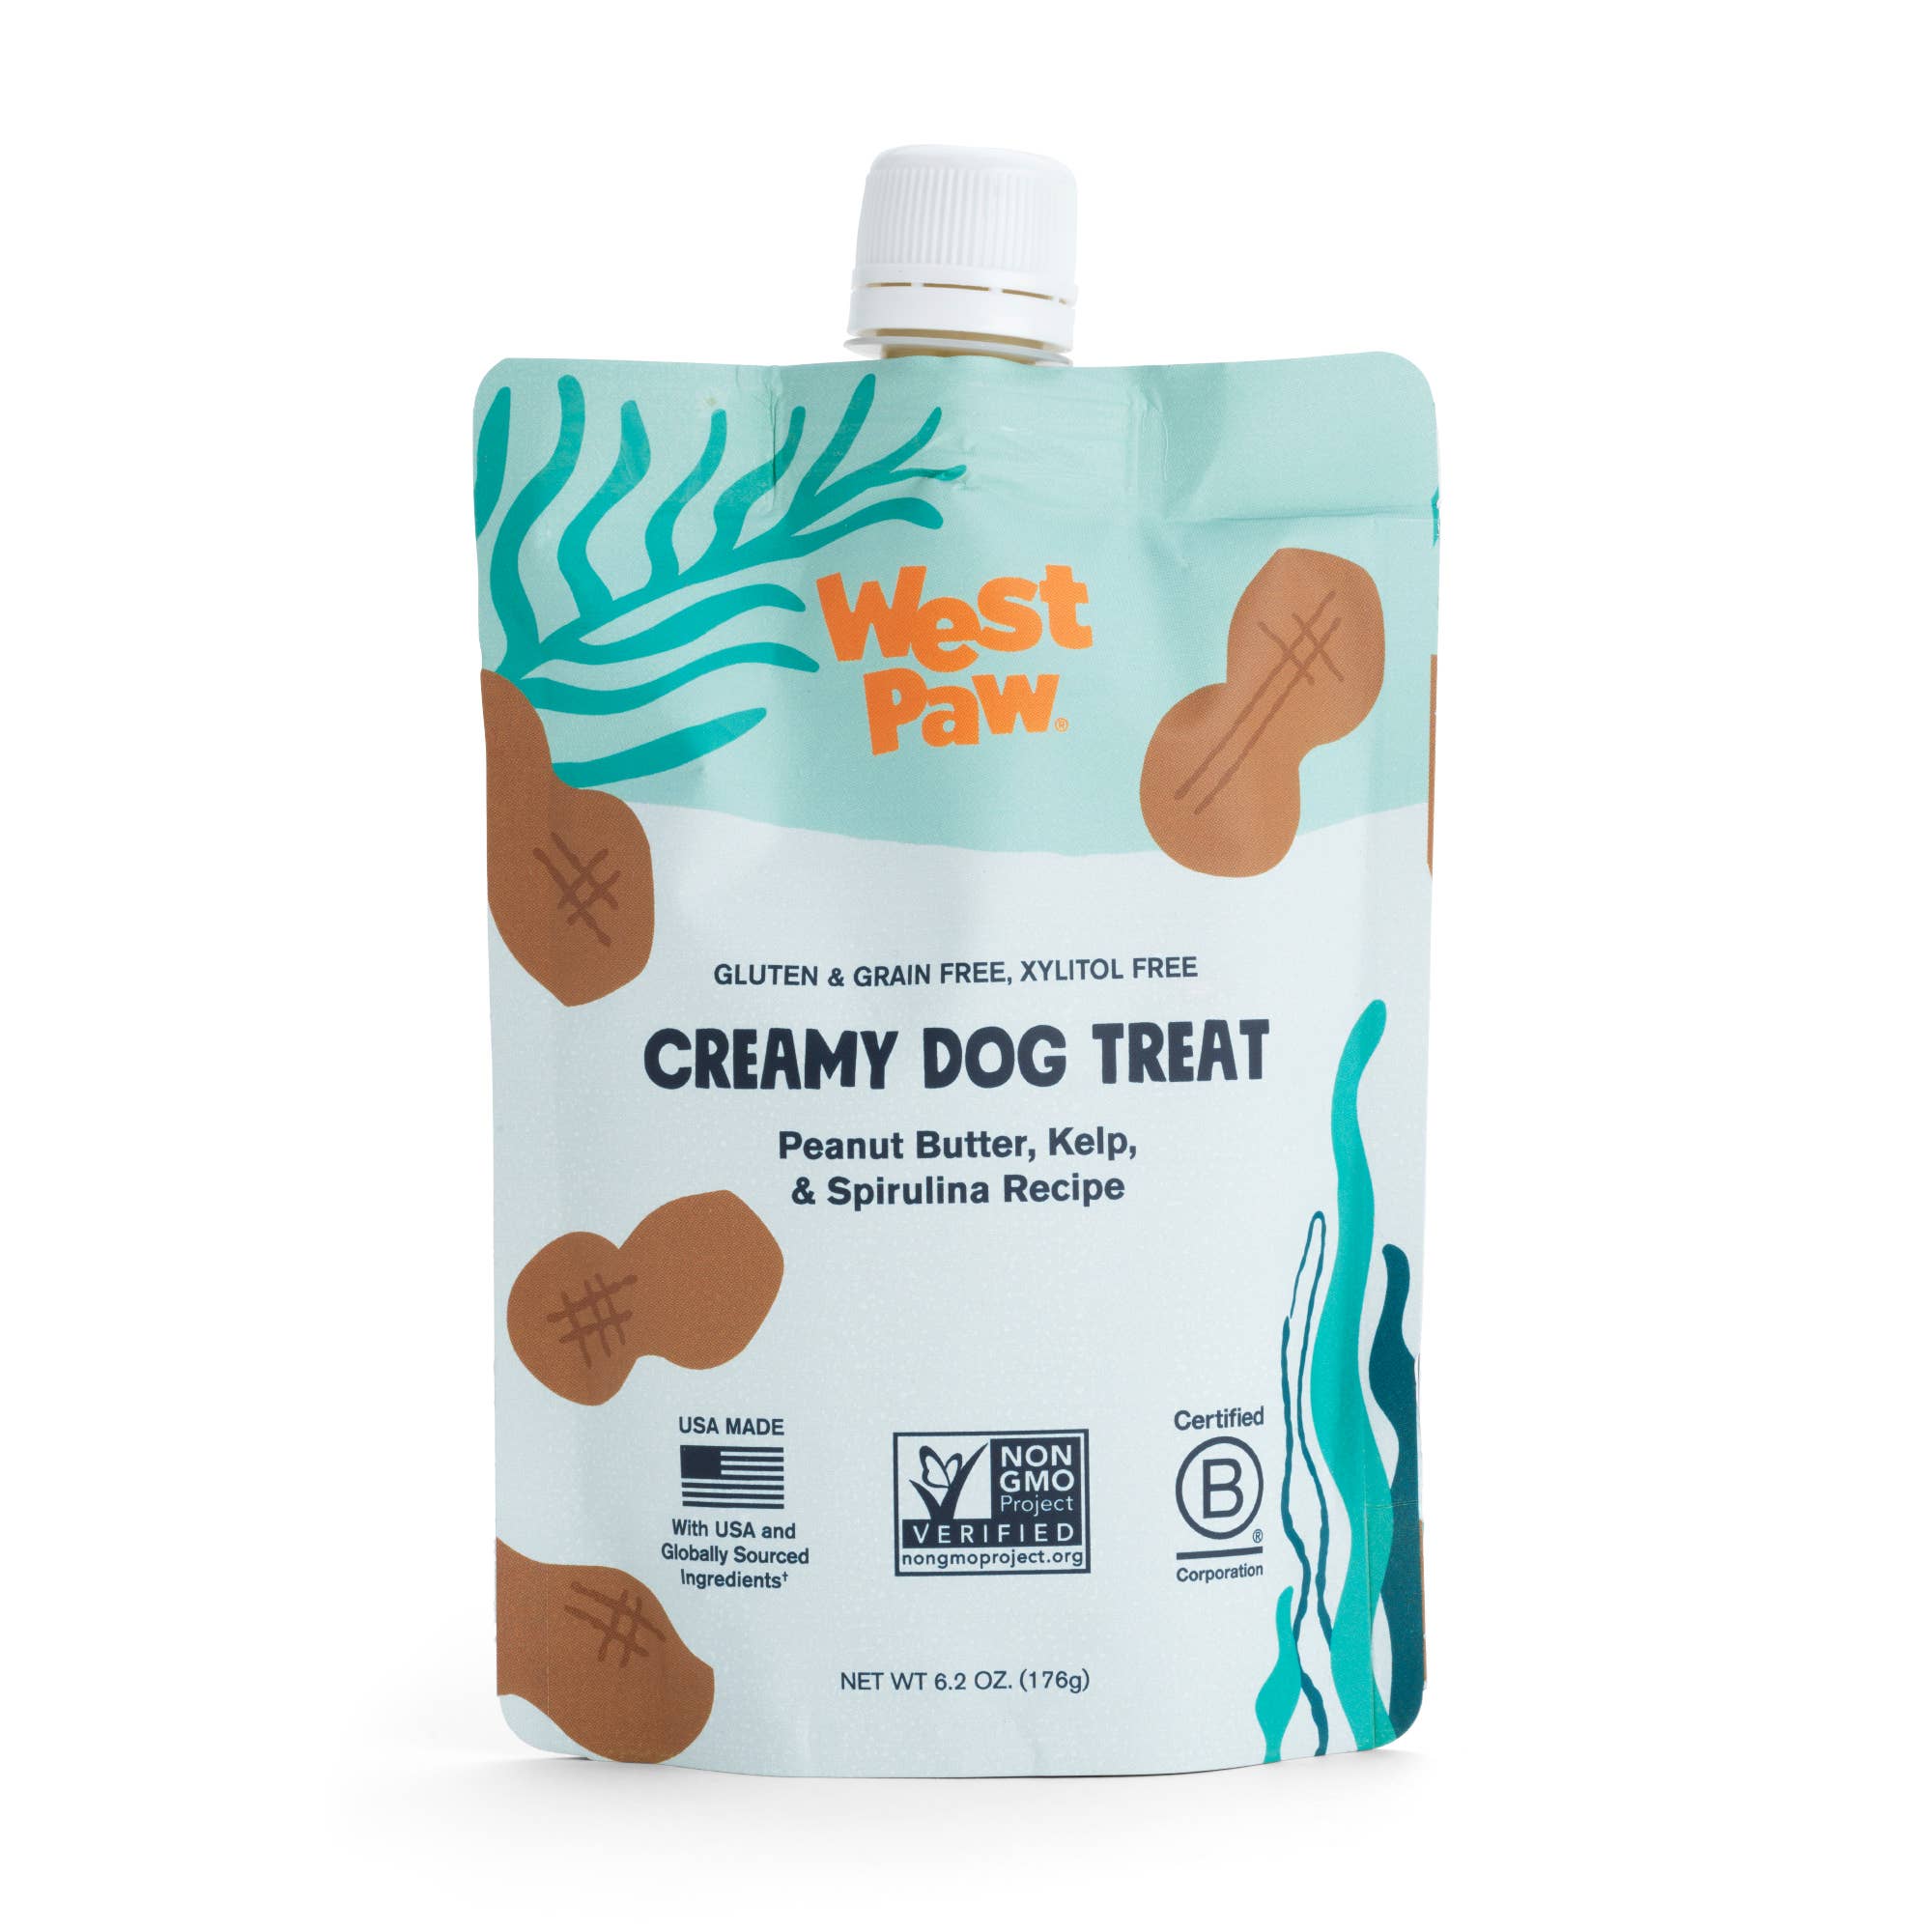 West Paw - Peanut Butter, Kelp & Spirulina Creamy Dog Treat